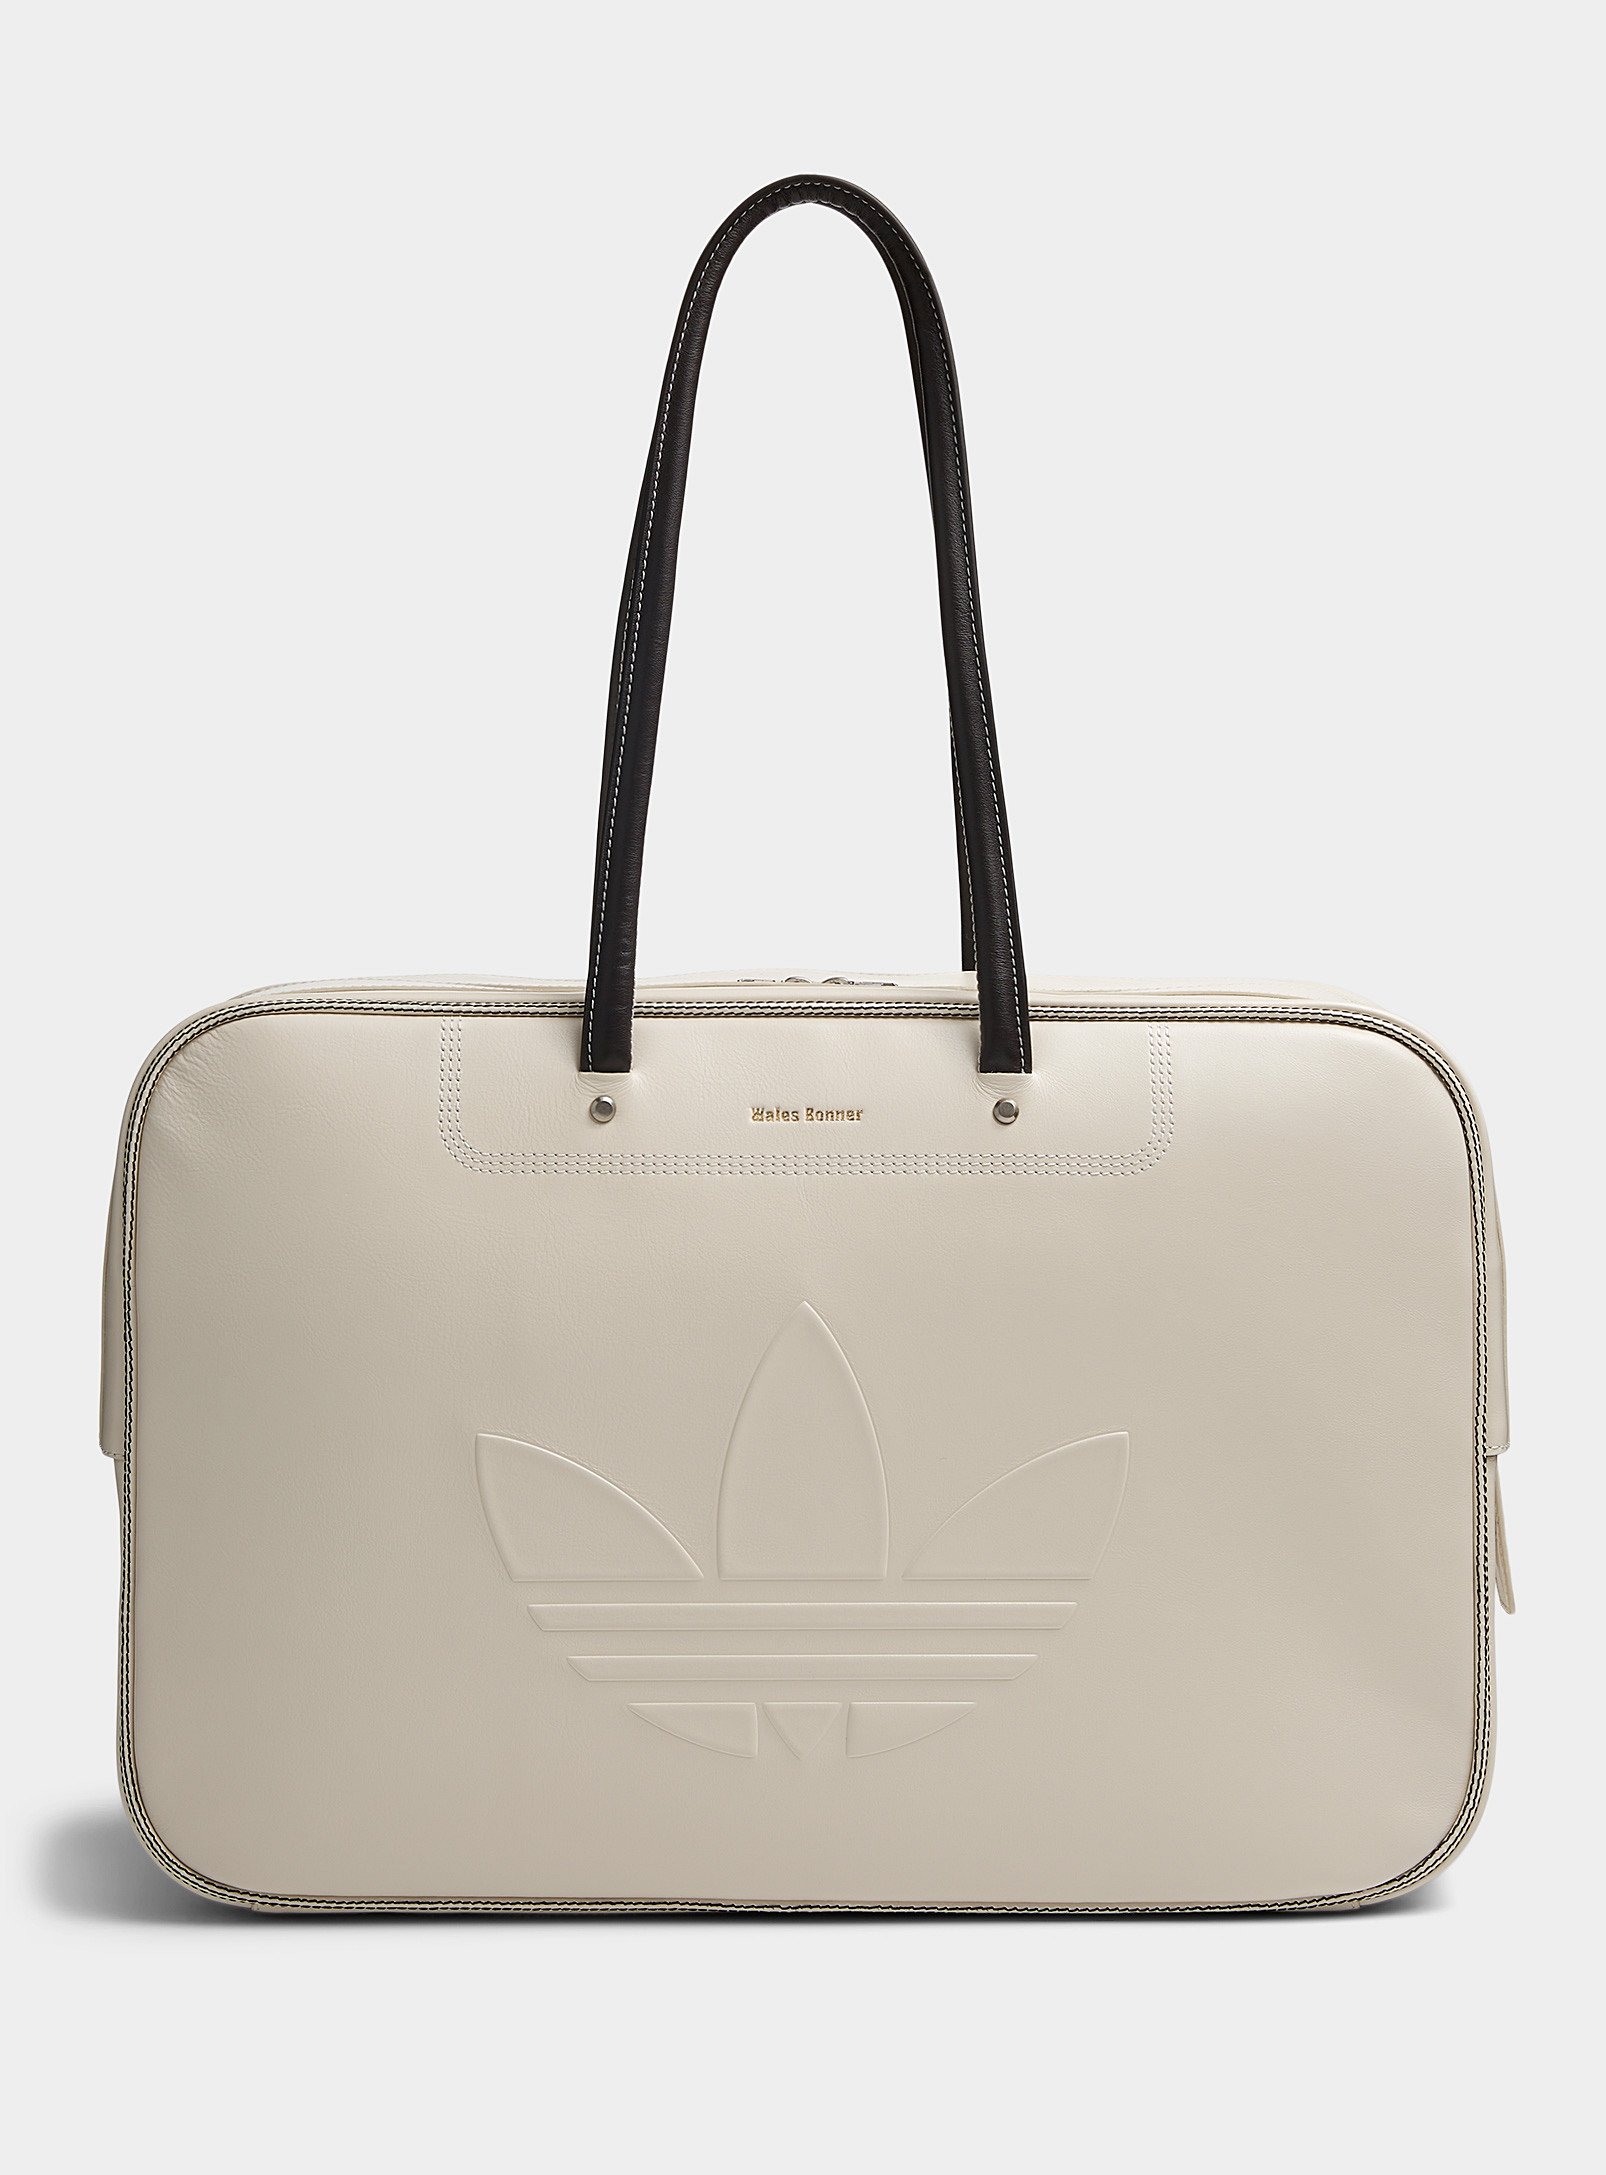 Adidas X Wales Bonner Embossed Logo Leather Weekender Bag In Off White